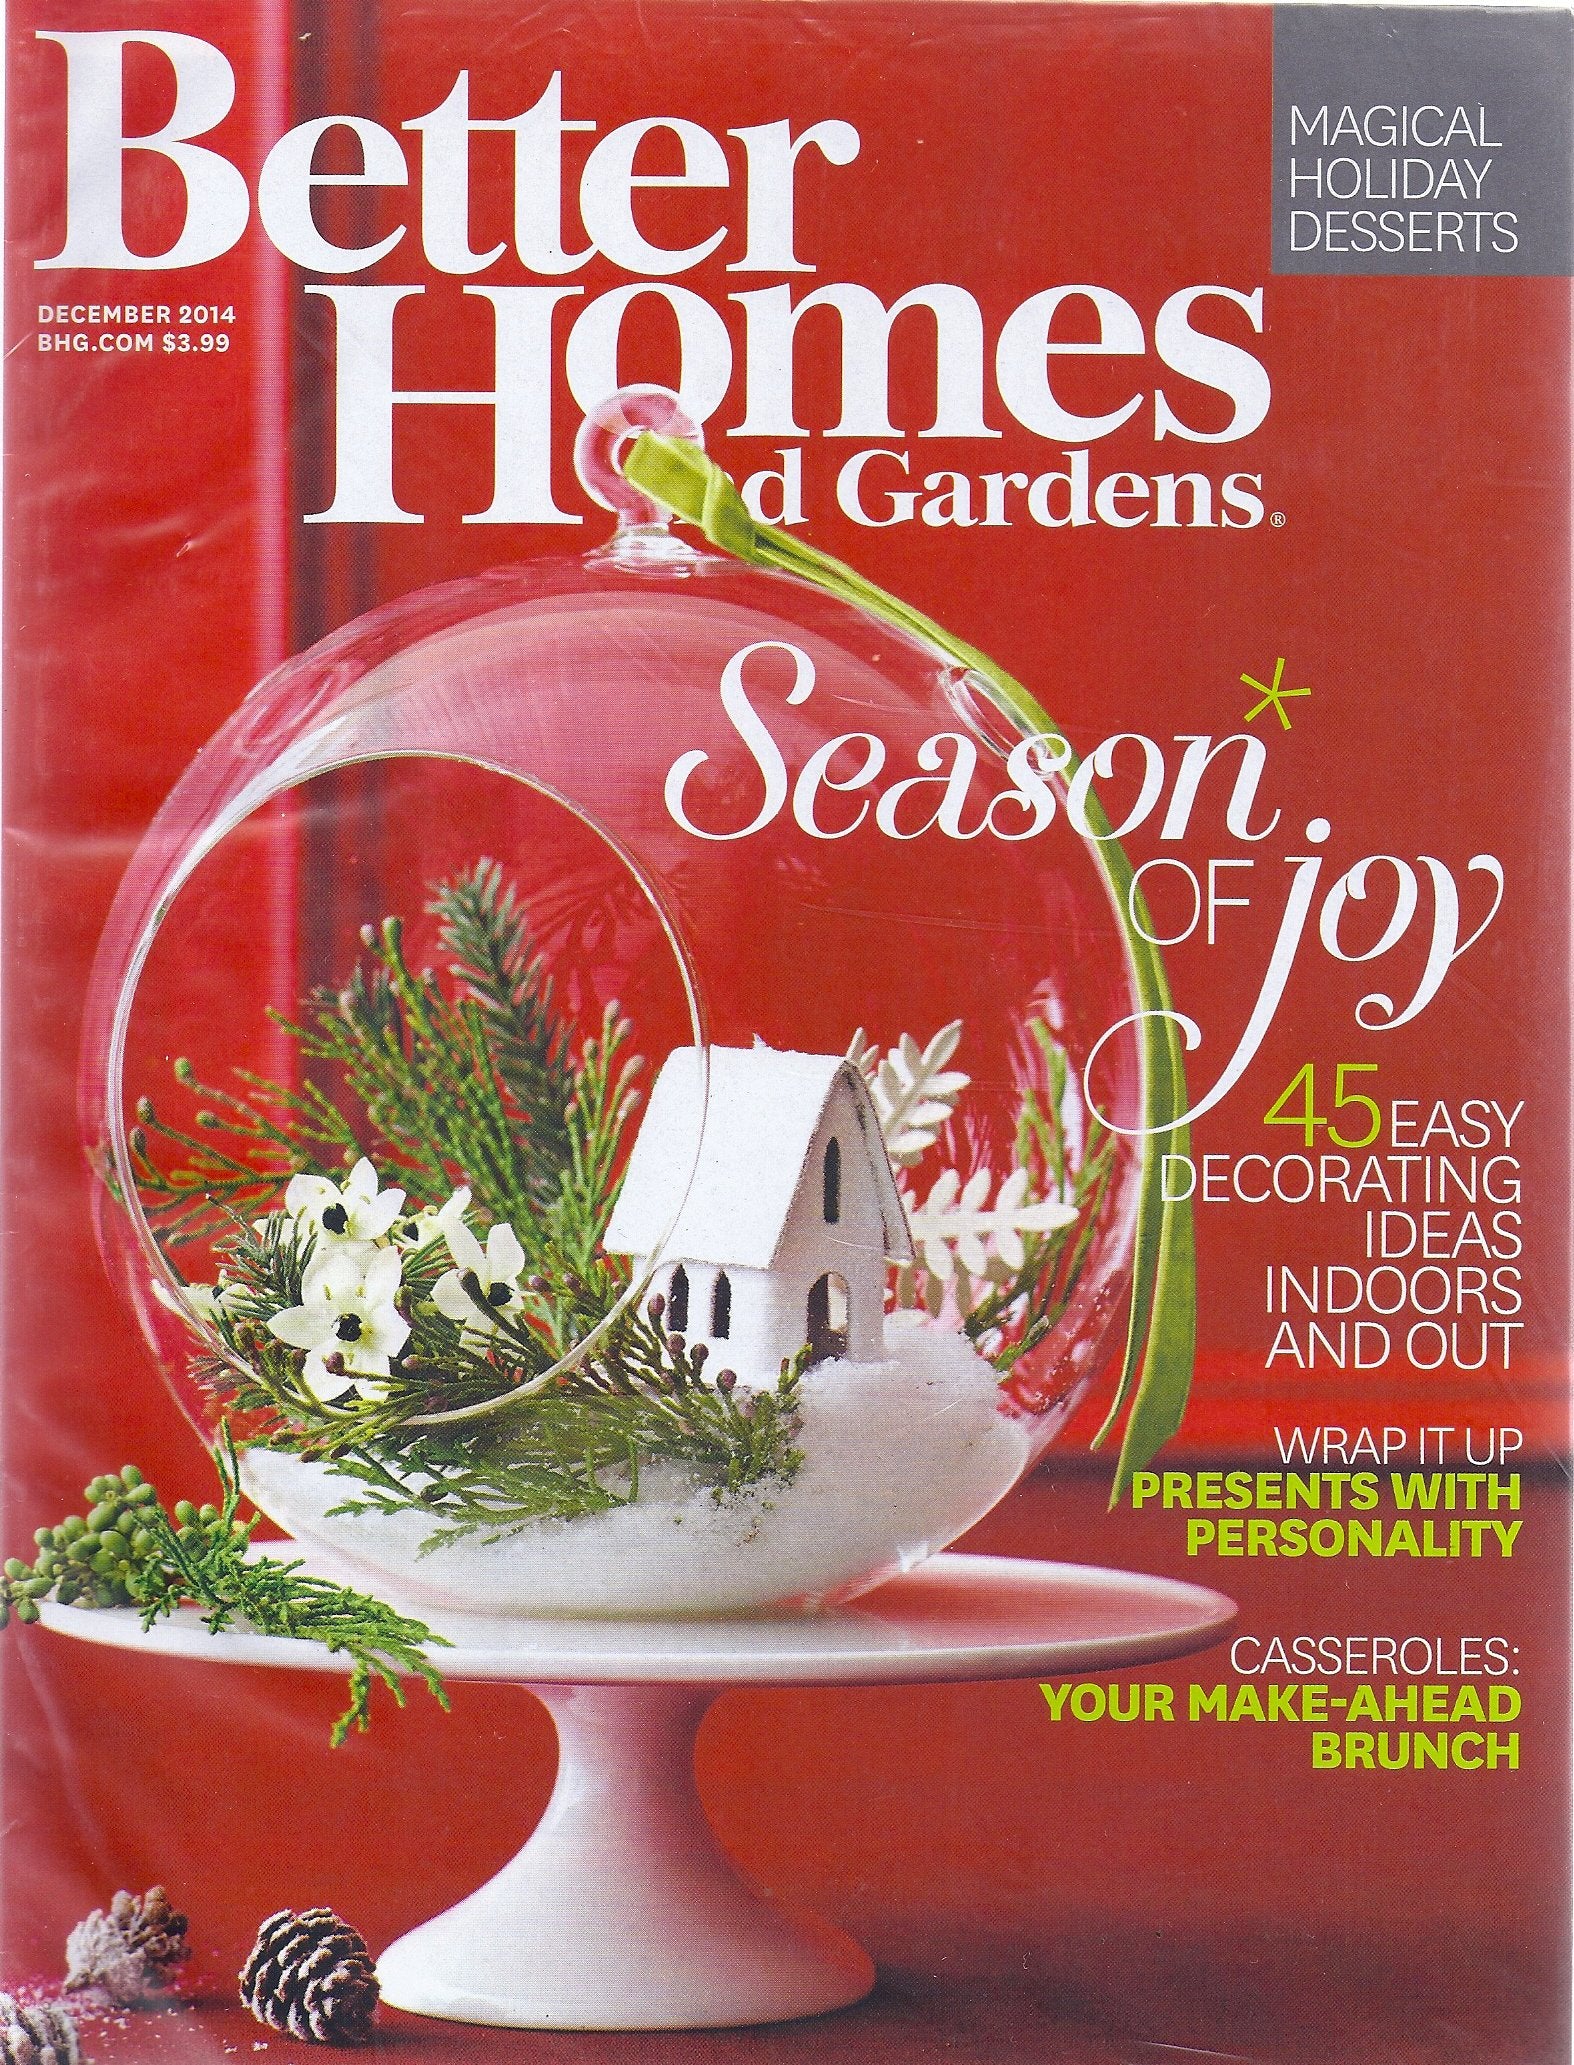 Better Homes and Gardens -Season of Joy - December 2014